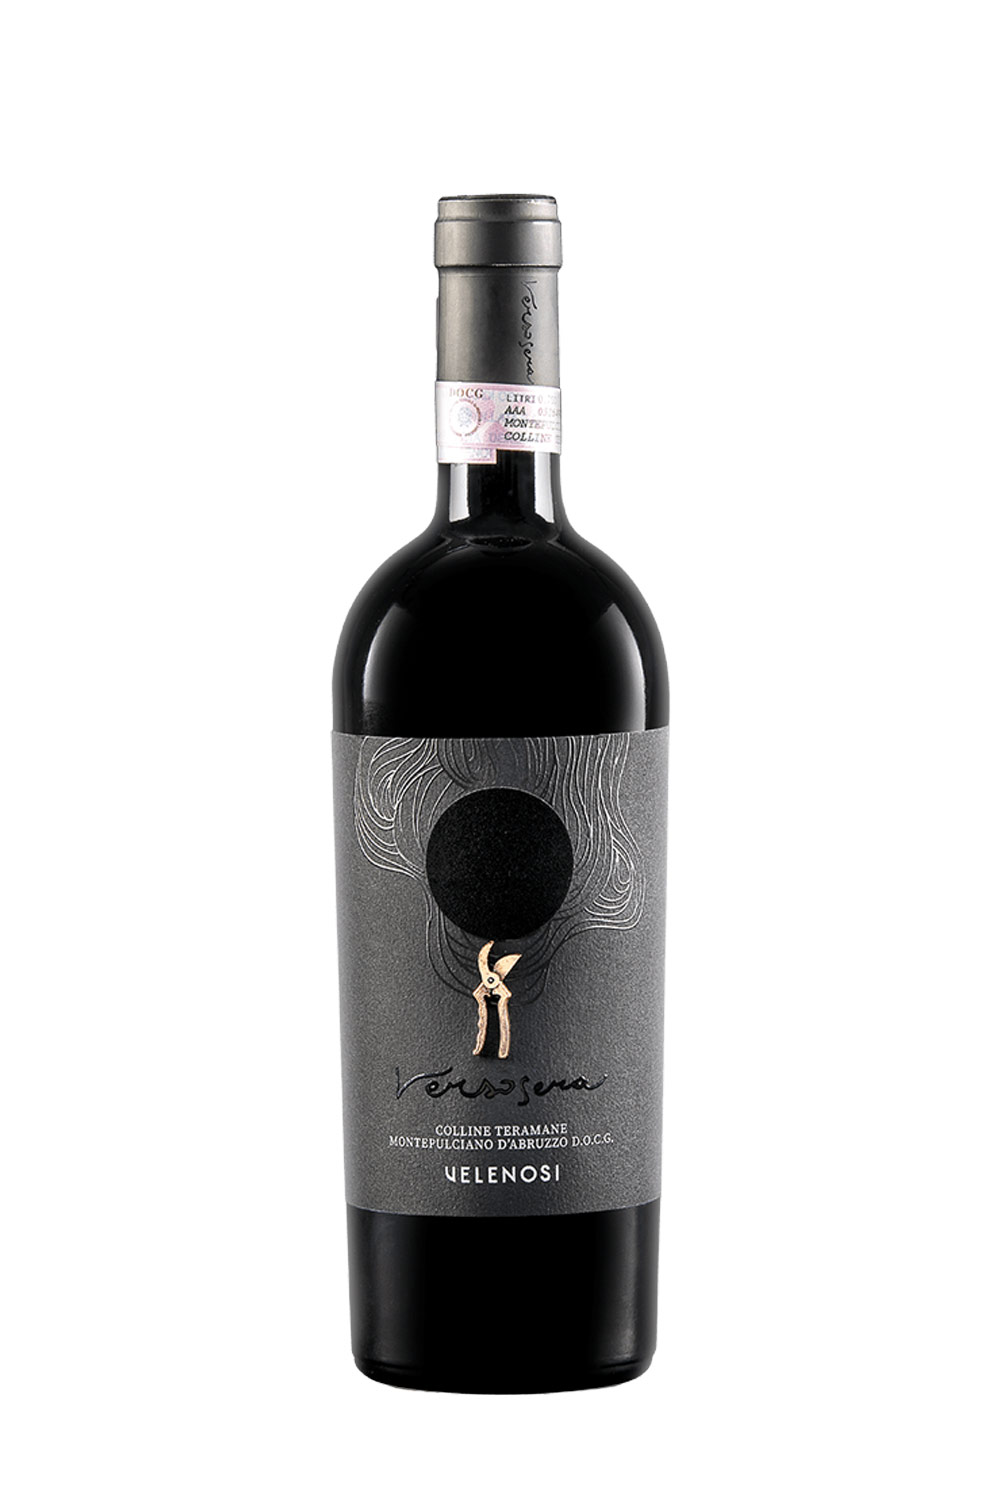 Verso d´Abruzzo kaufen Velenosi Teramane Vini Weine aus Senti Colline Italien - bei Montepulciano | DOCG Sera 2020 Online